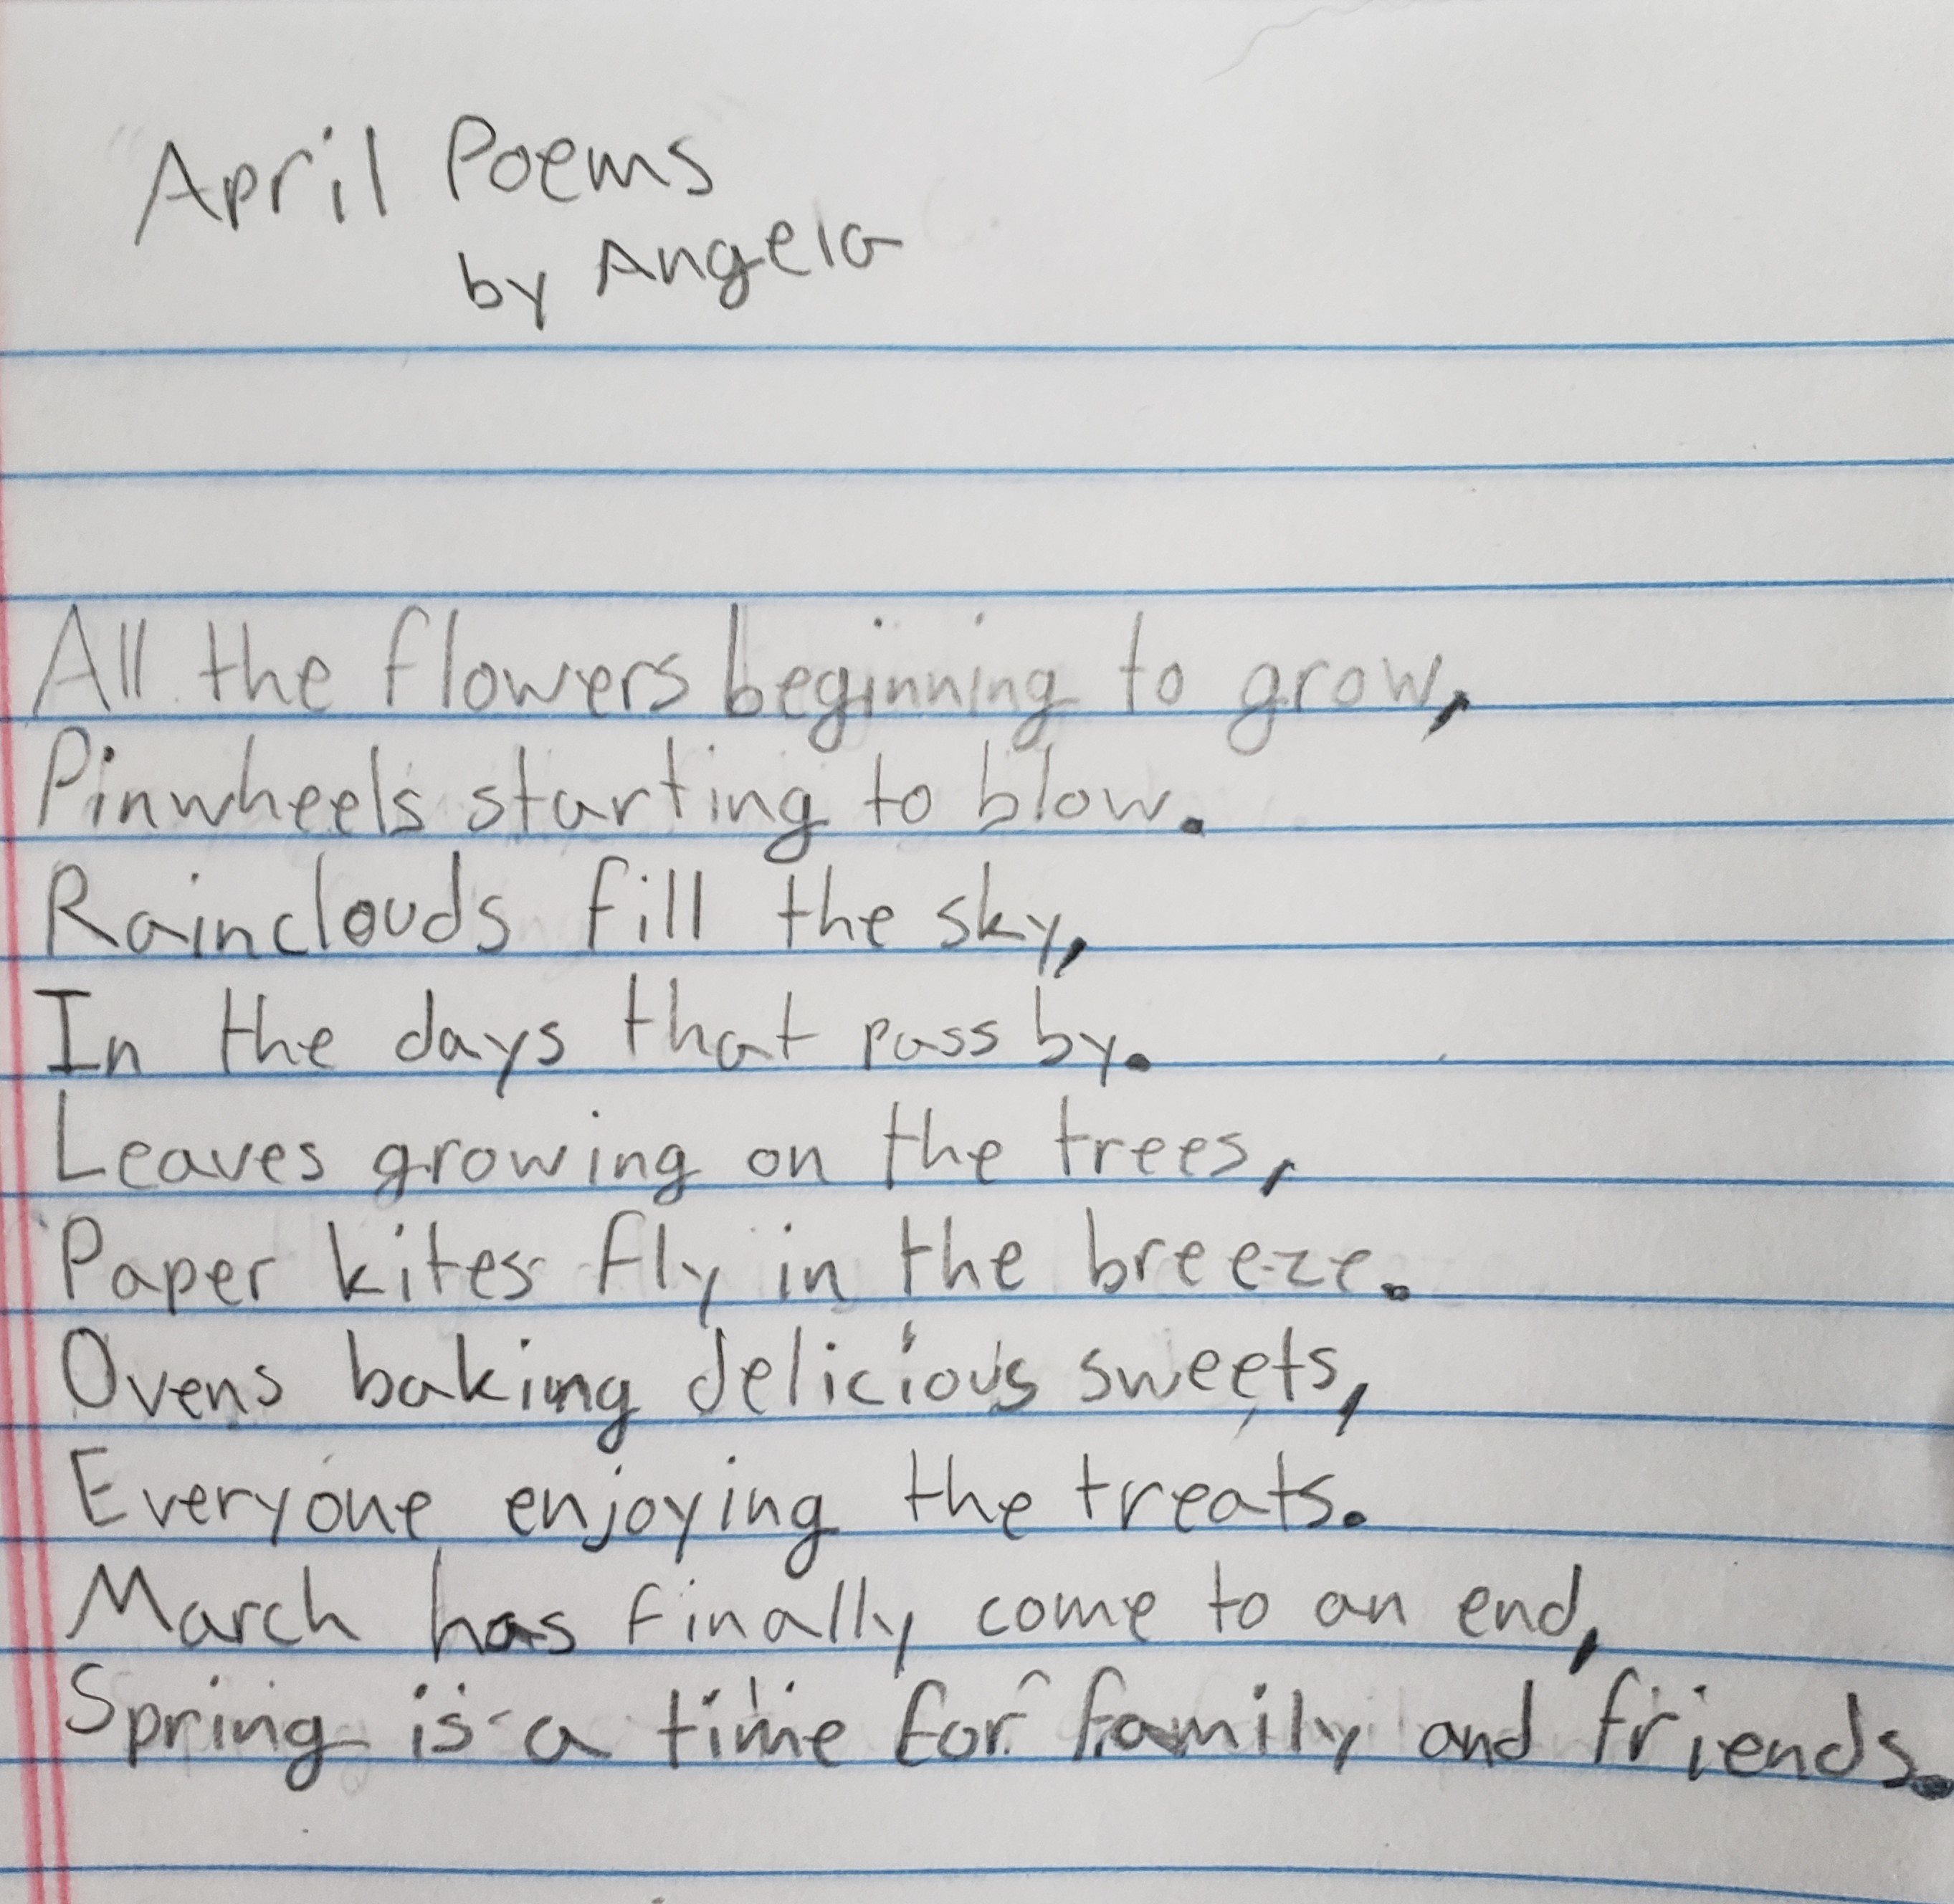 Angela's Poem